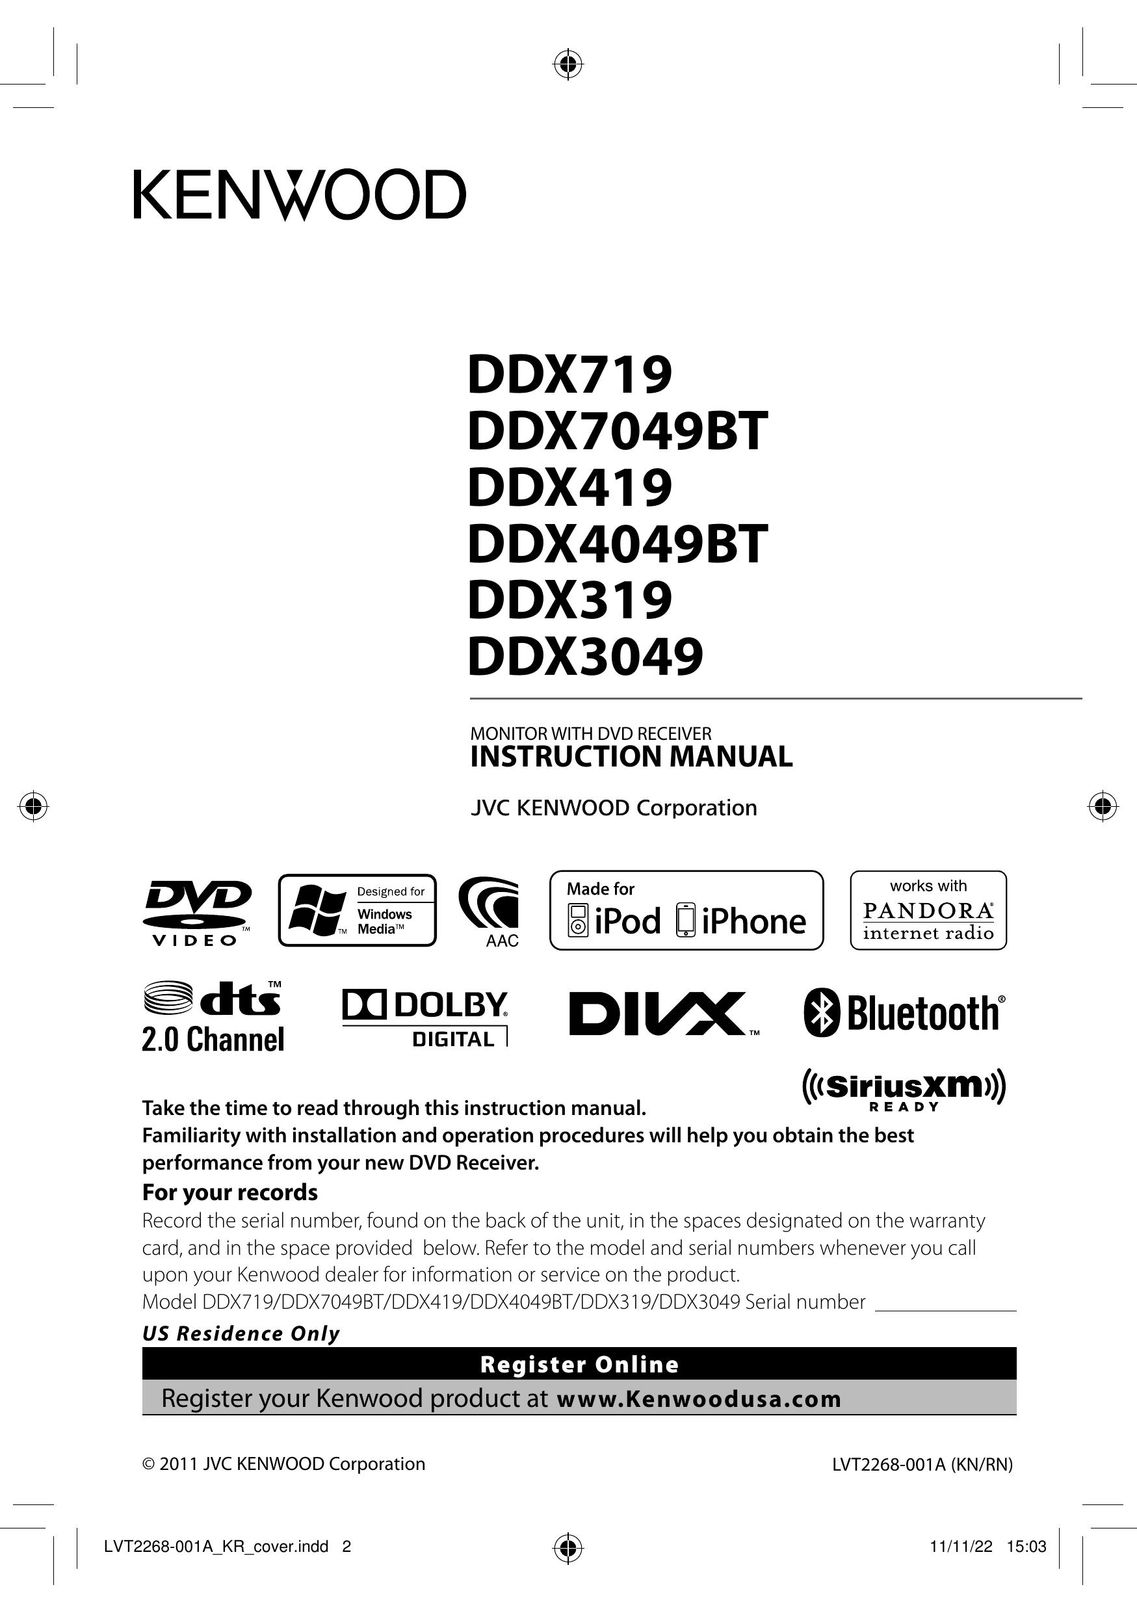 Kenwood DDX319 Car Video System User Manual